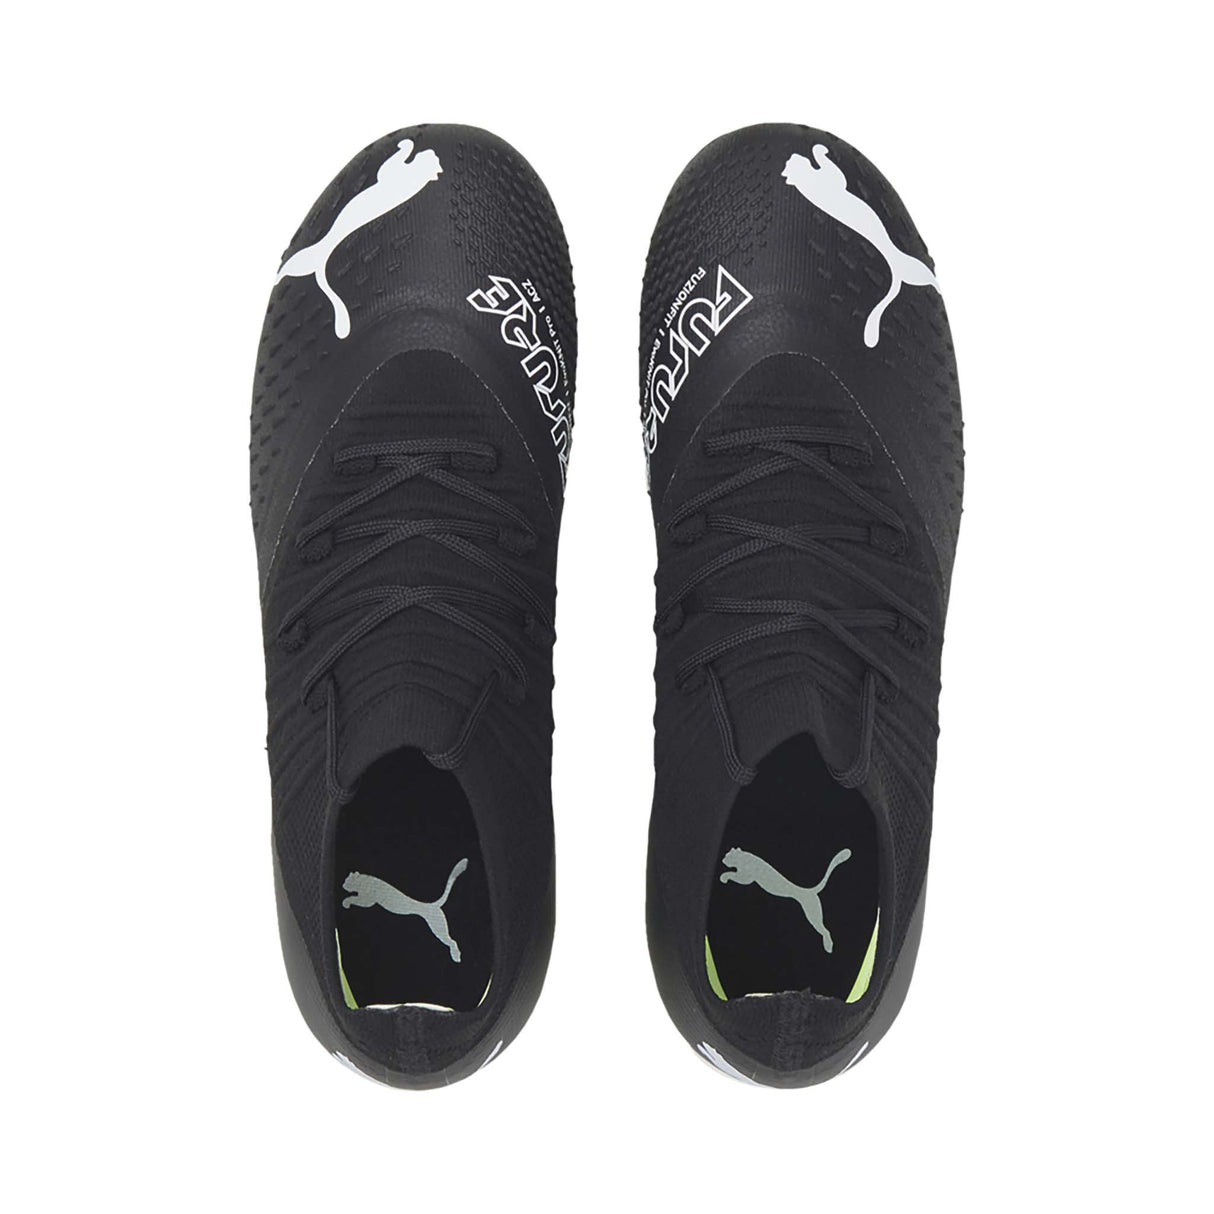 Puma Future Z 3.3 FG/AG souliers de soccer junior black white vue sup